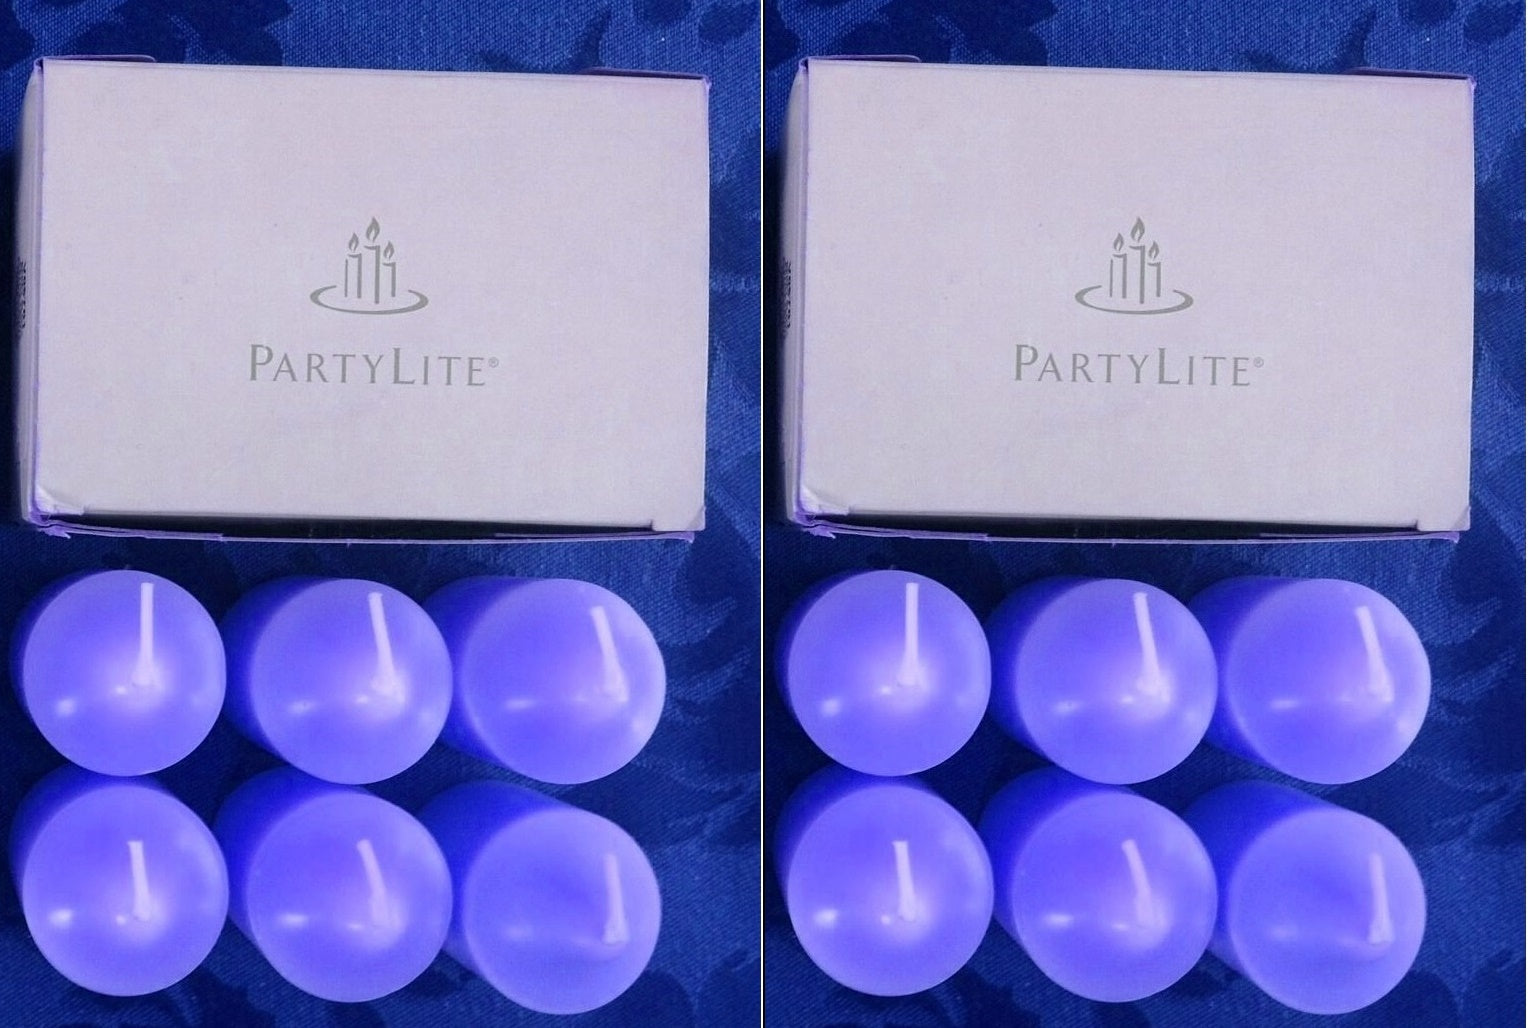 PartyLite 1 DOZEN Votive Wax Candles - 2 BOXES = 12 VOTIVES BLUEBERRY WISTERIA